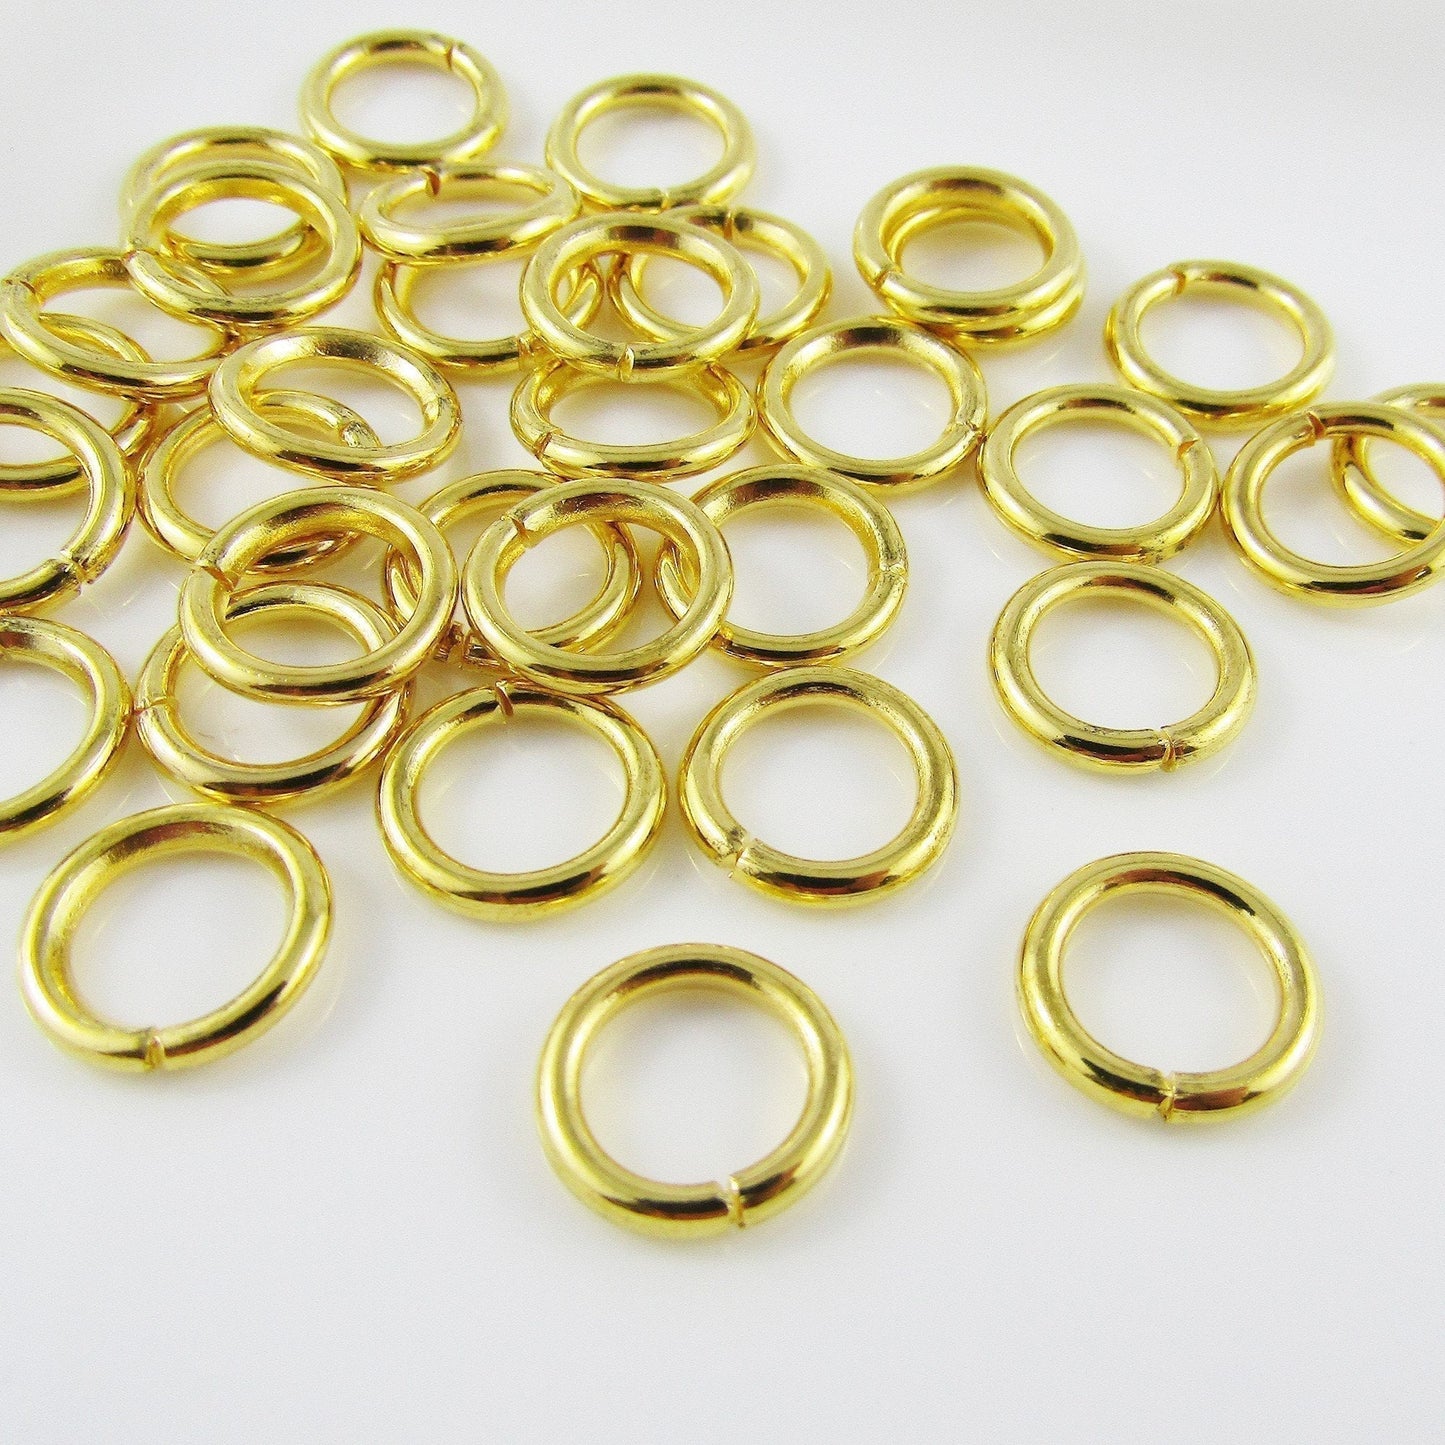 Bulk 25 pieces of 12x2mm Golden Jump Rings Open Jumprings Findings